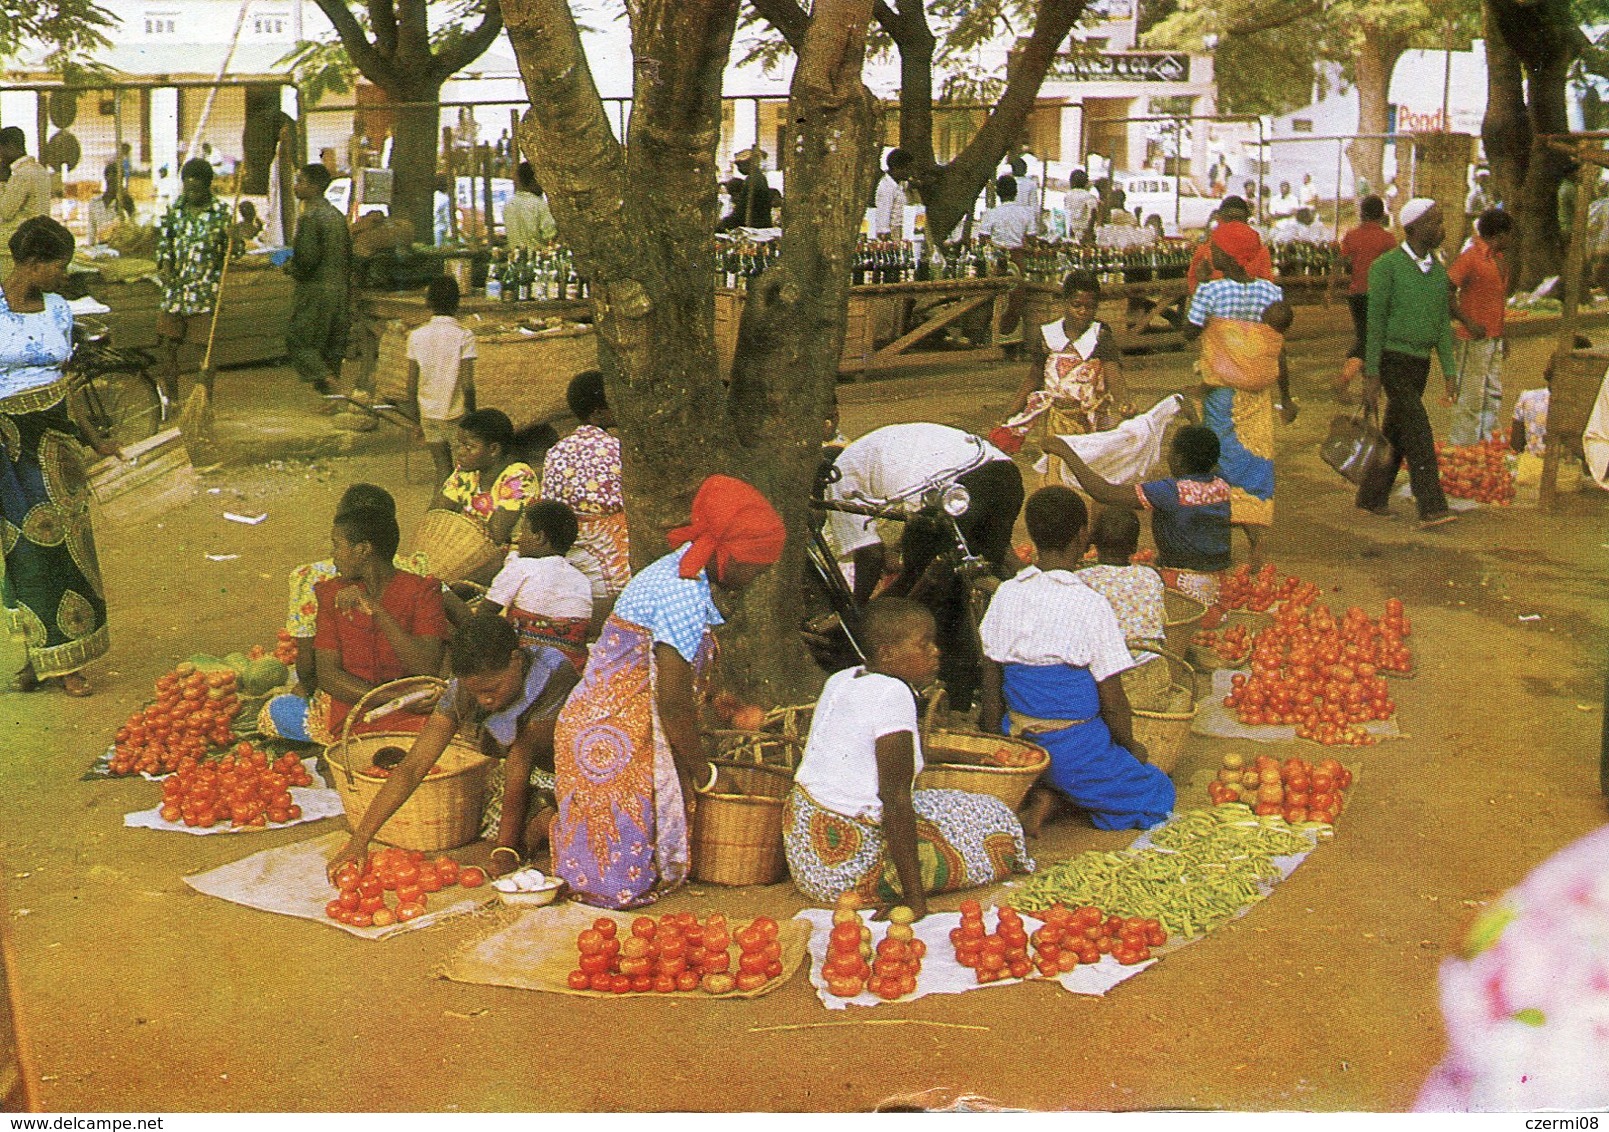 Malawi - Market Scene - Malawi